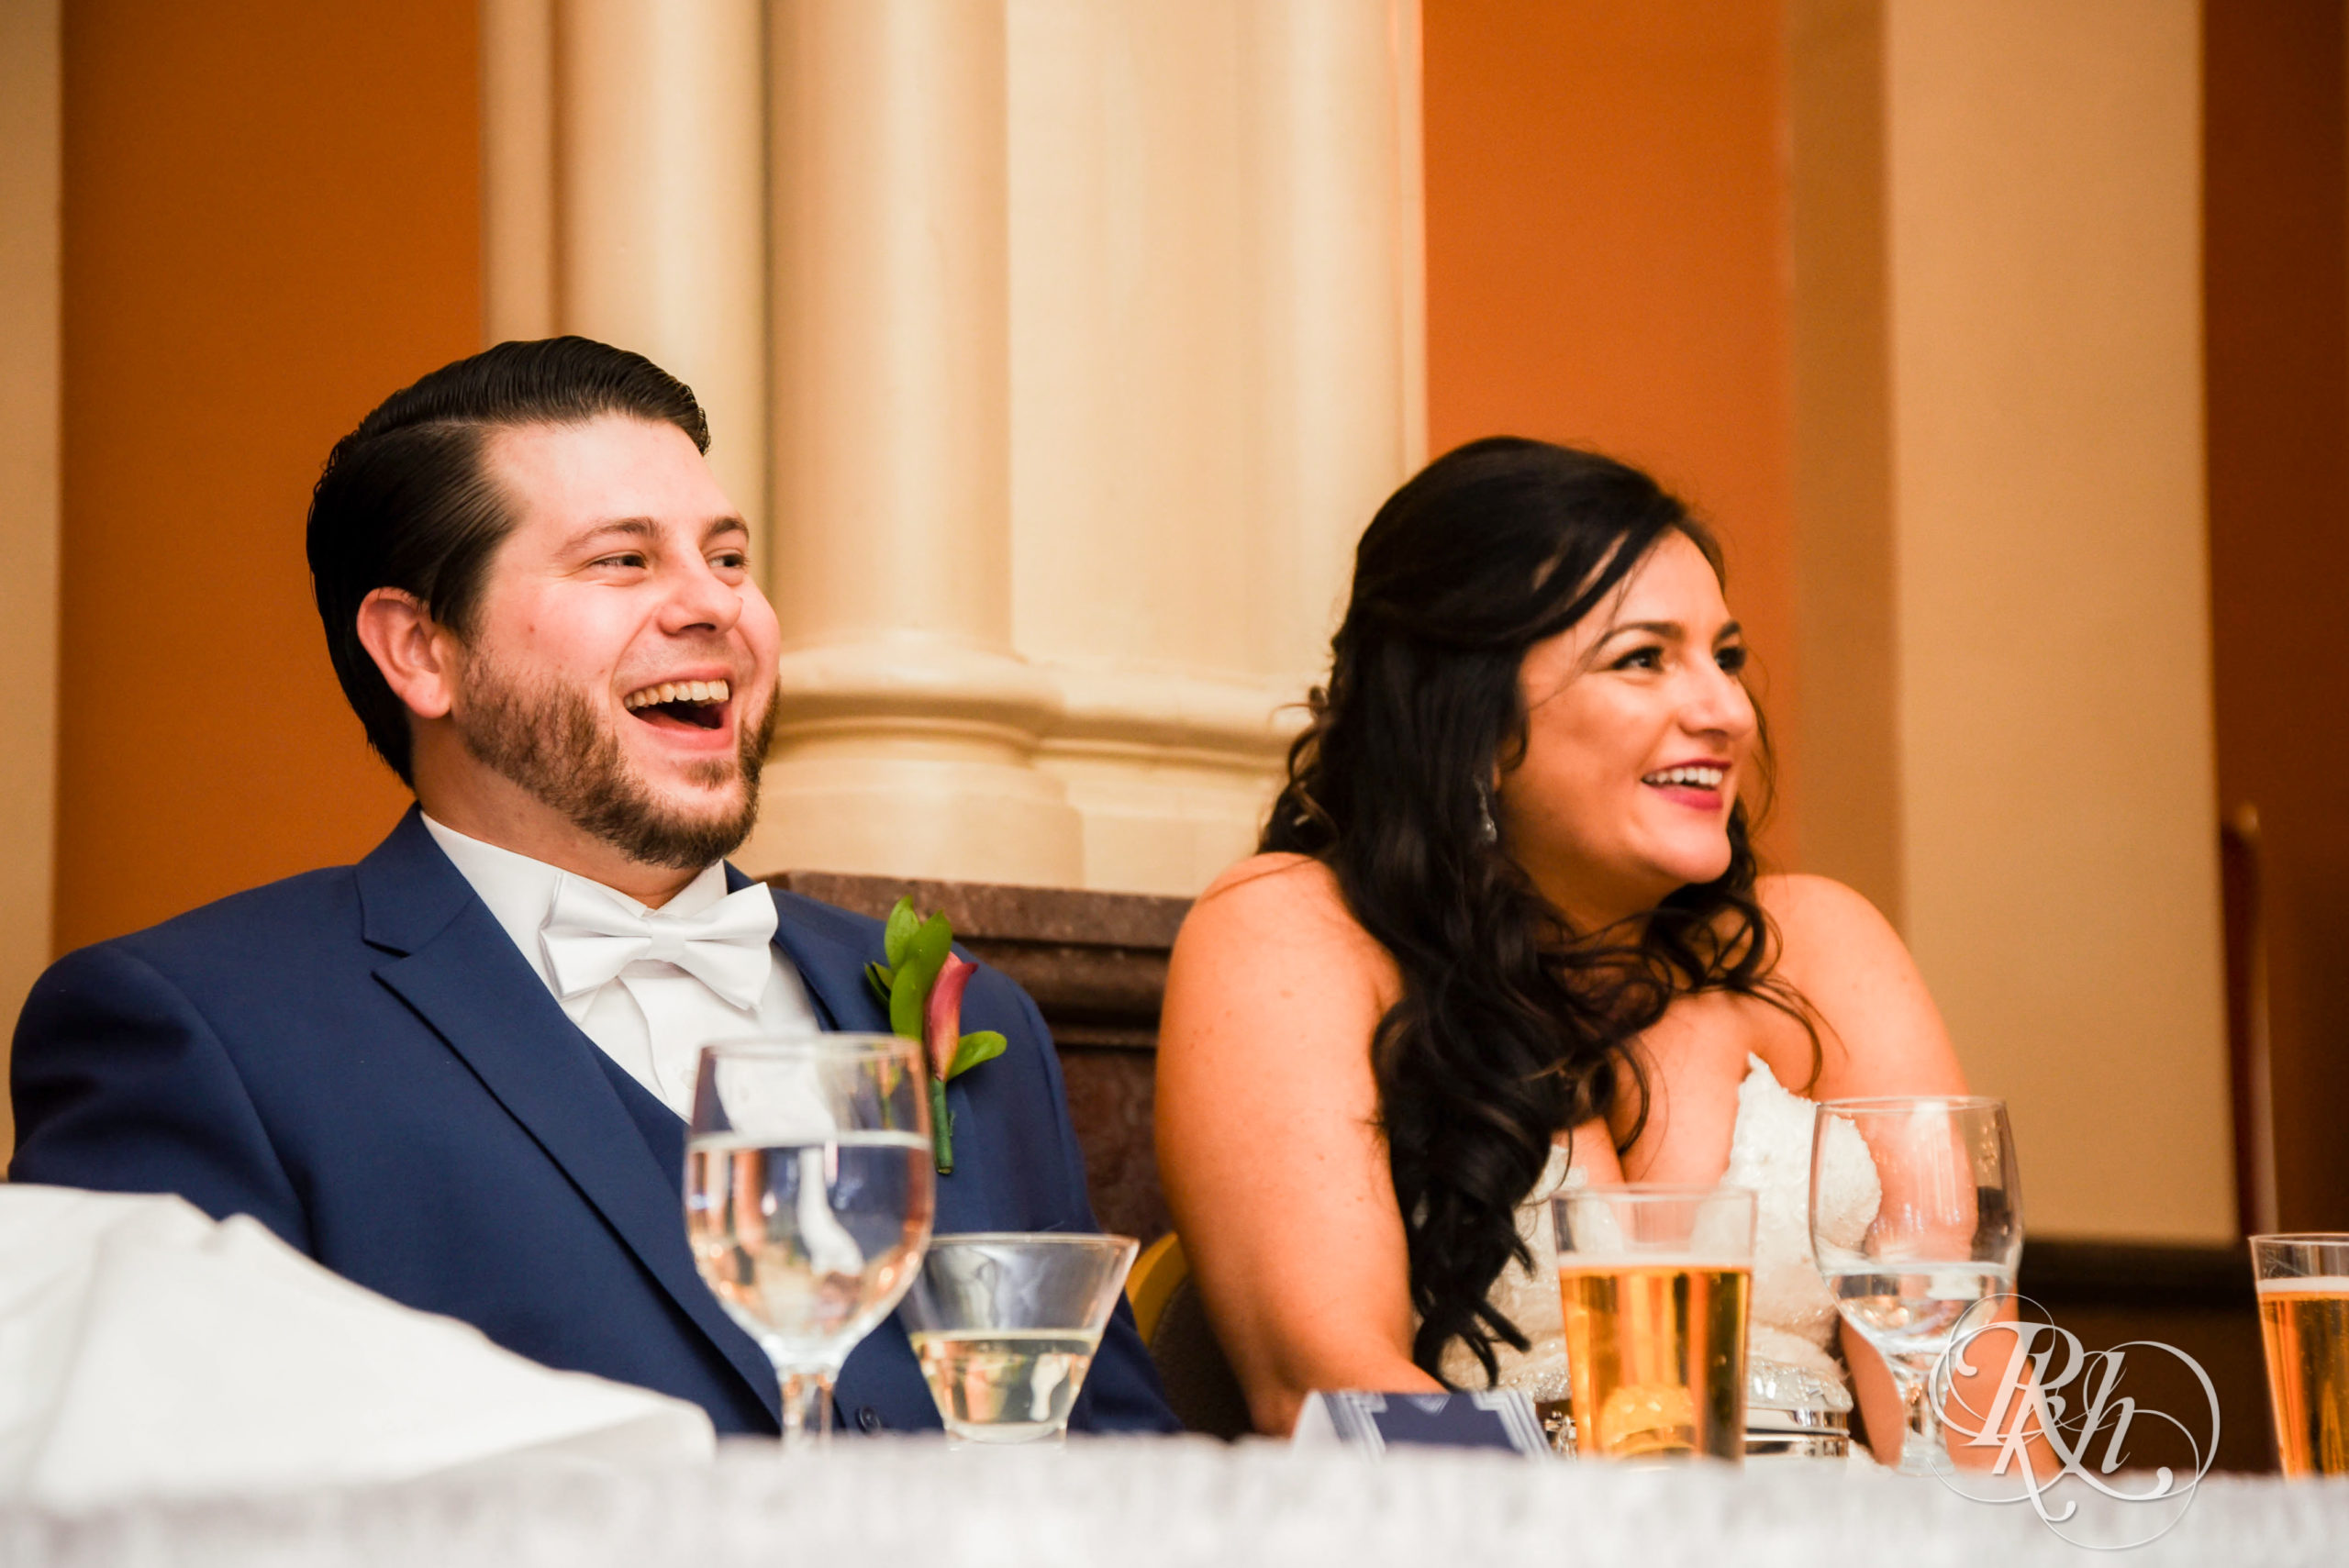 Bride and groom smile during speeches on wedding day at Landmark Center in Saint Paul, Minnesota.